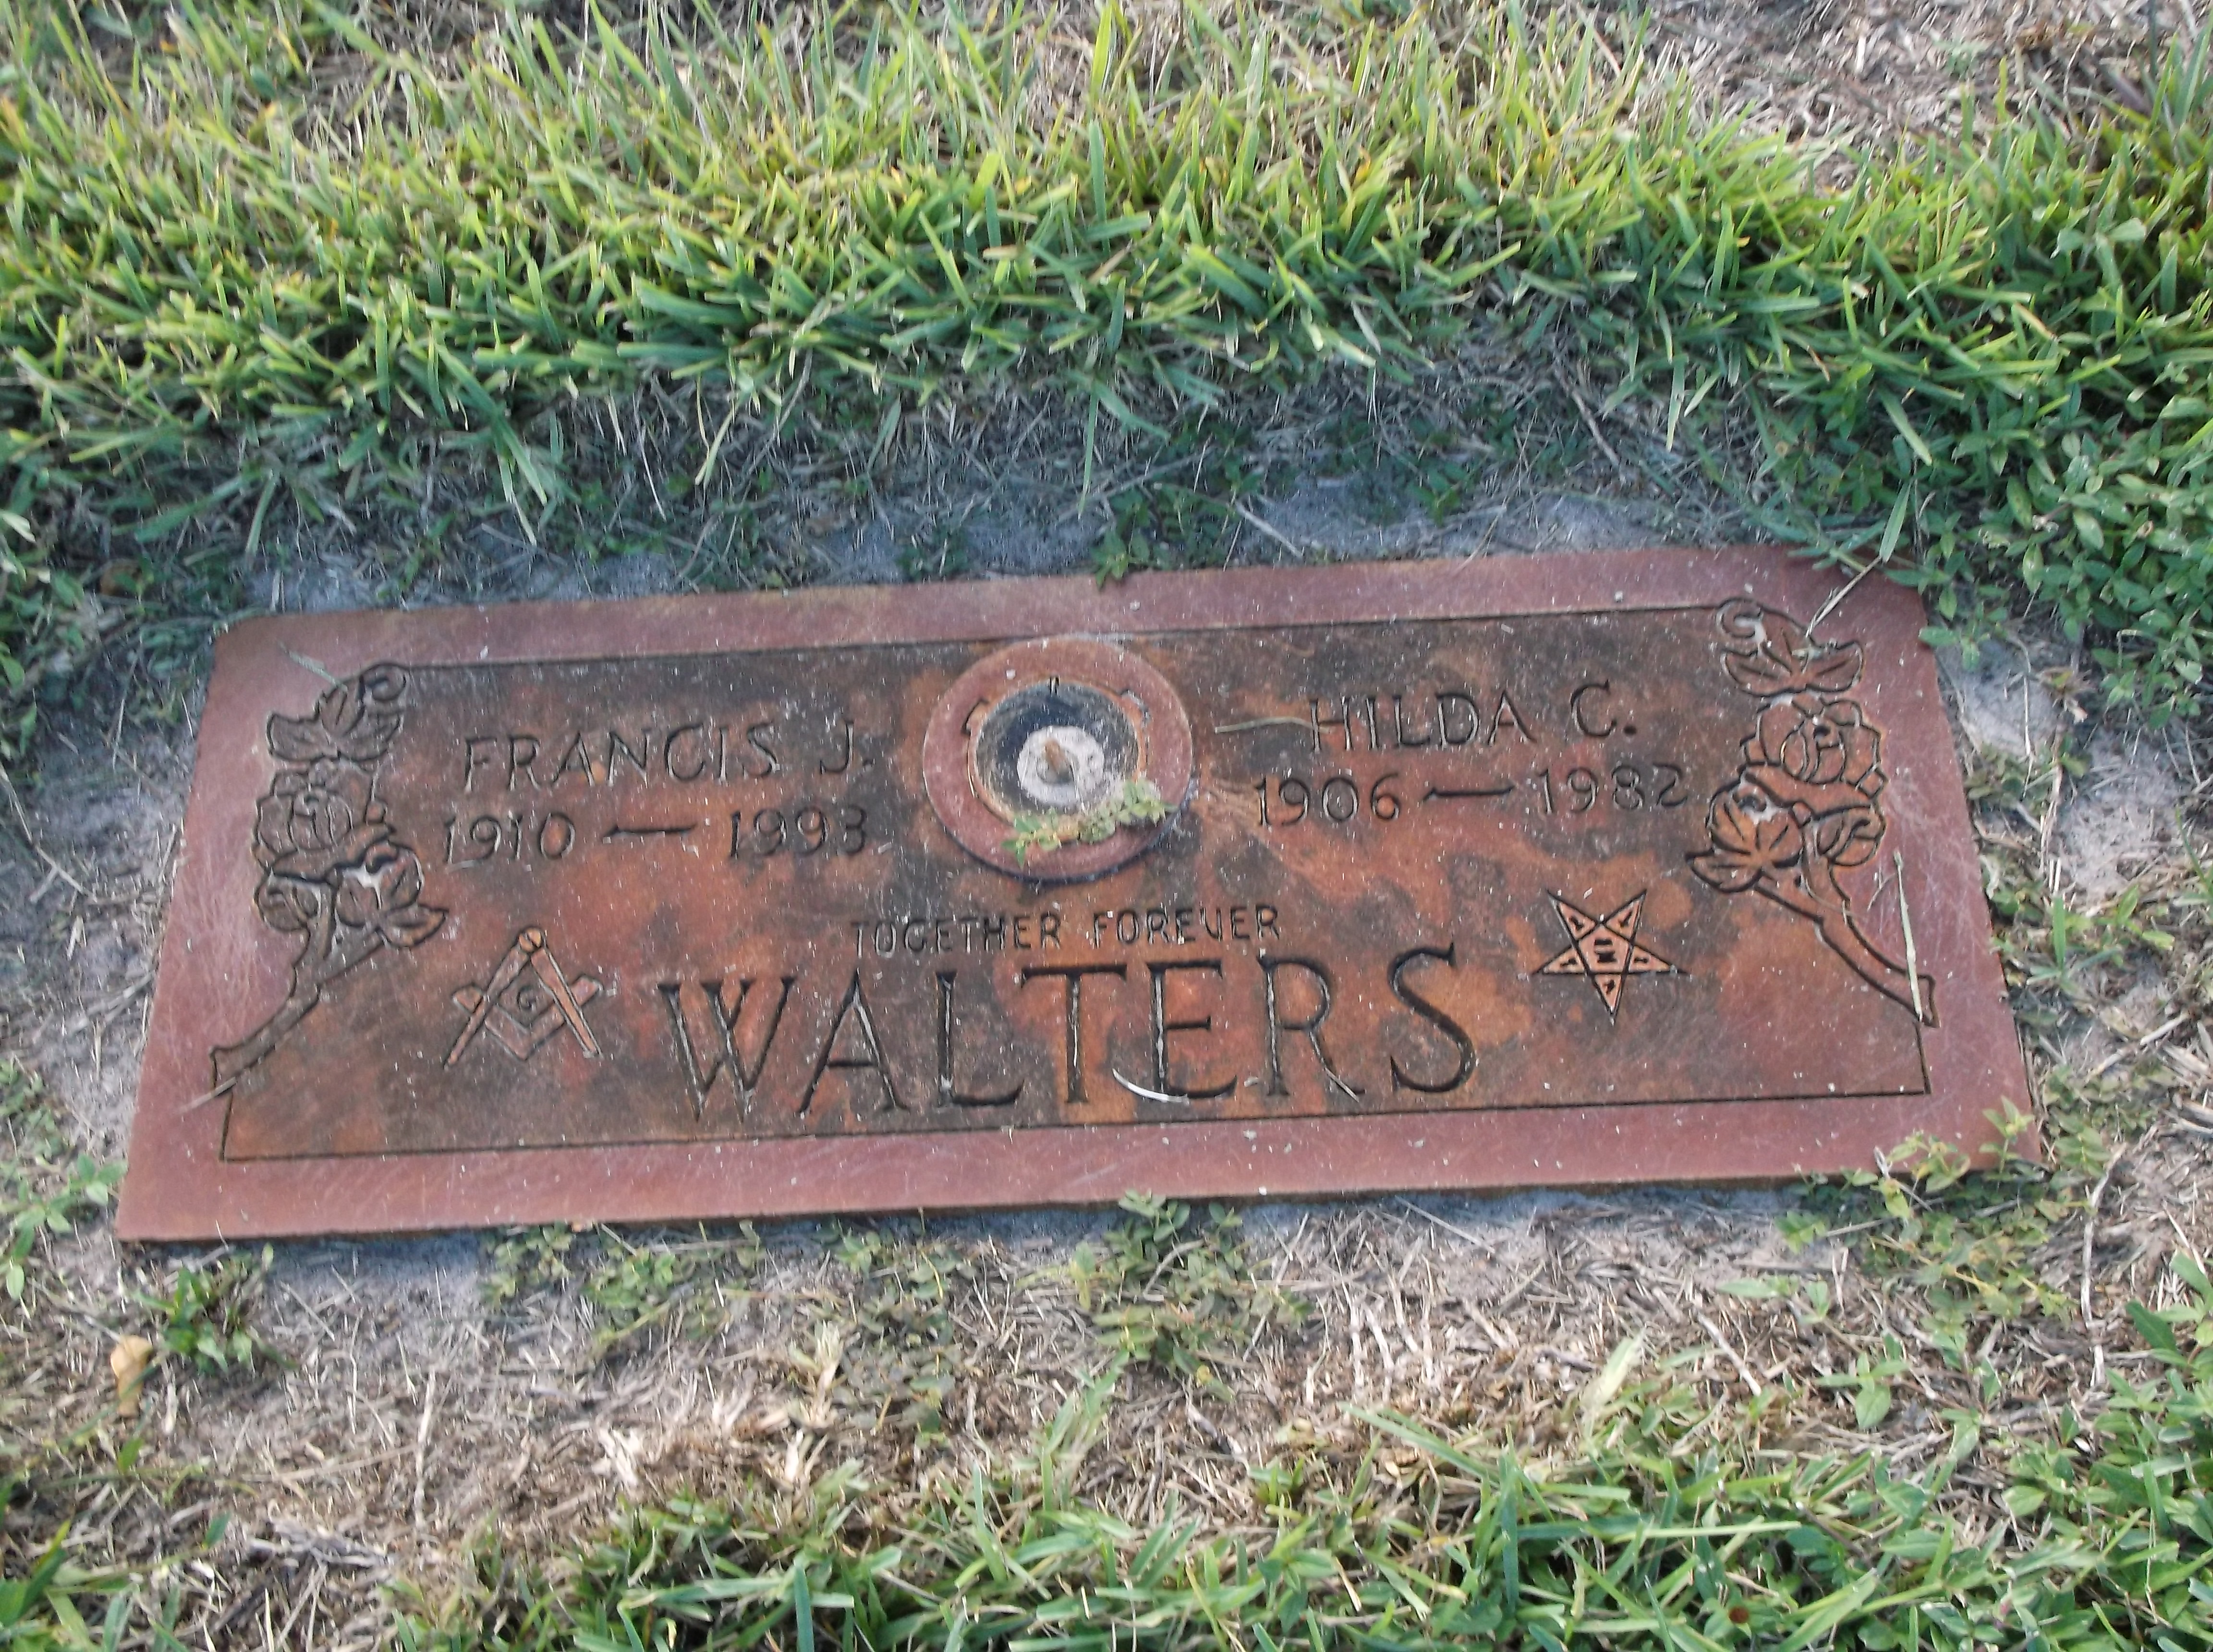 Francis J Walters